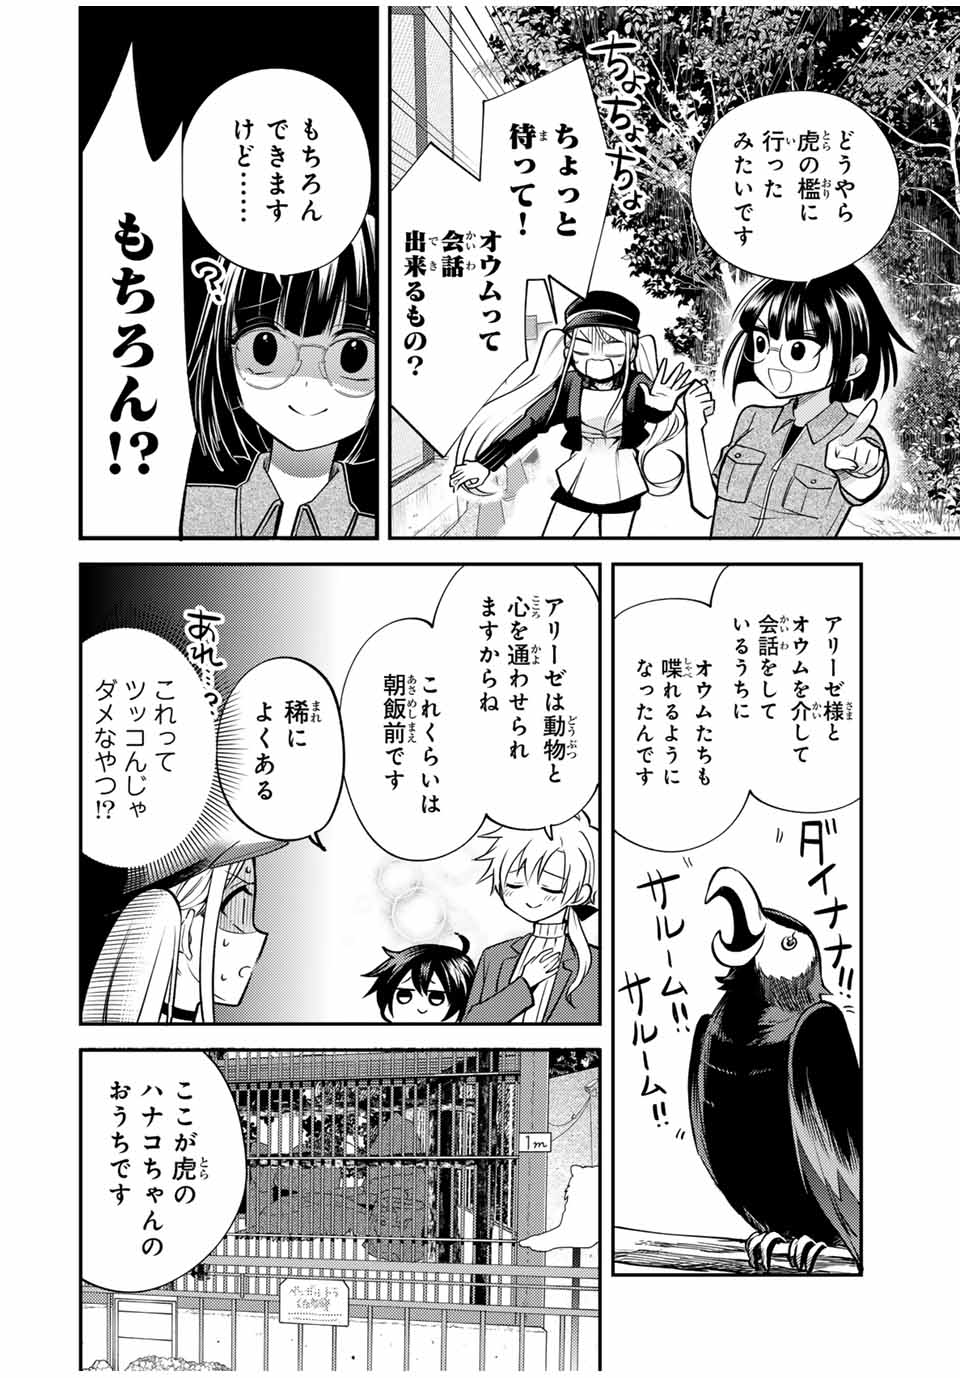 Gendai Teni no Dai Ni Ouji - Chapter 13.1 - Page 12